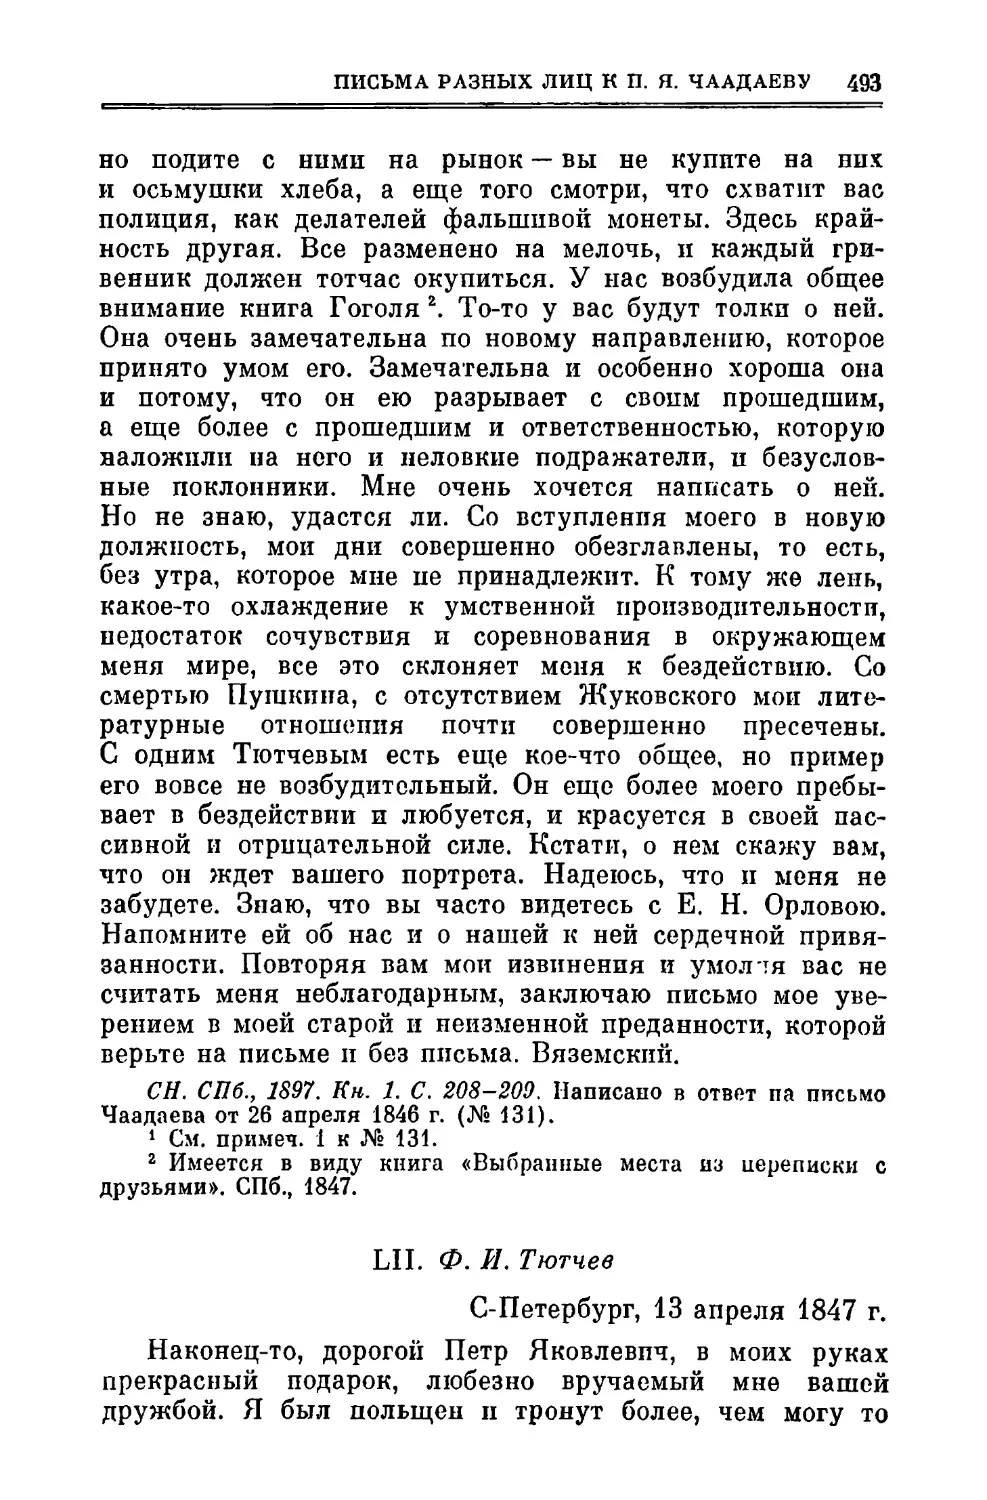 LII. Тютчев Ф.И. 13.IV.1847